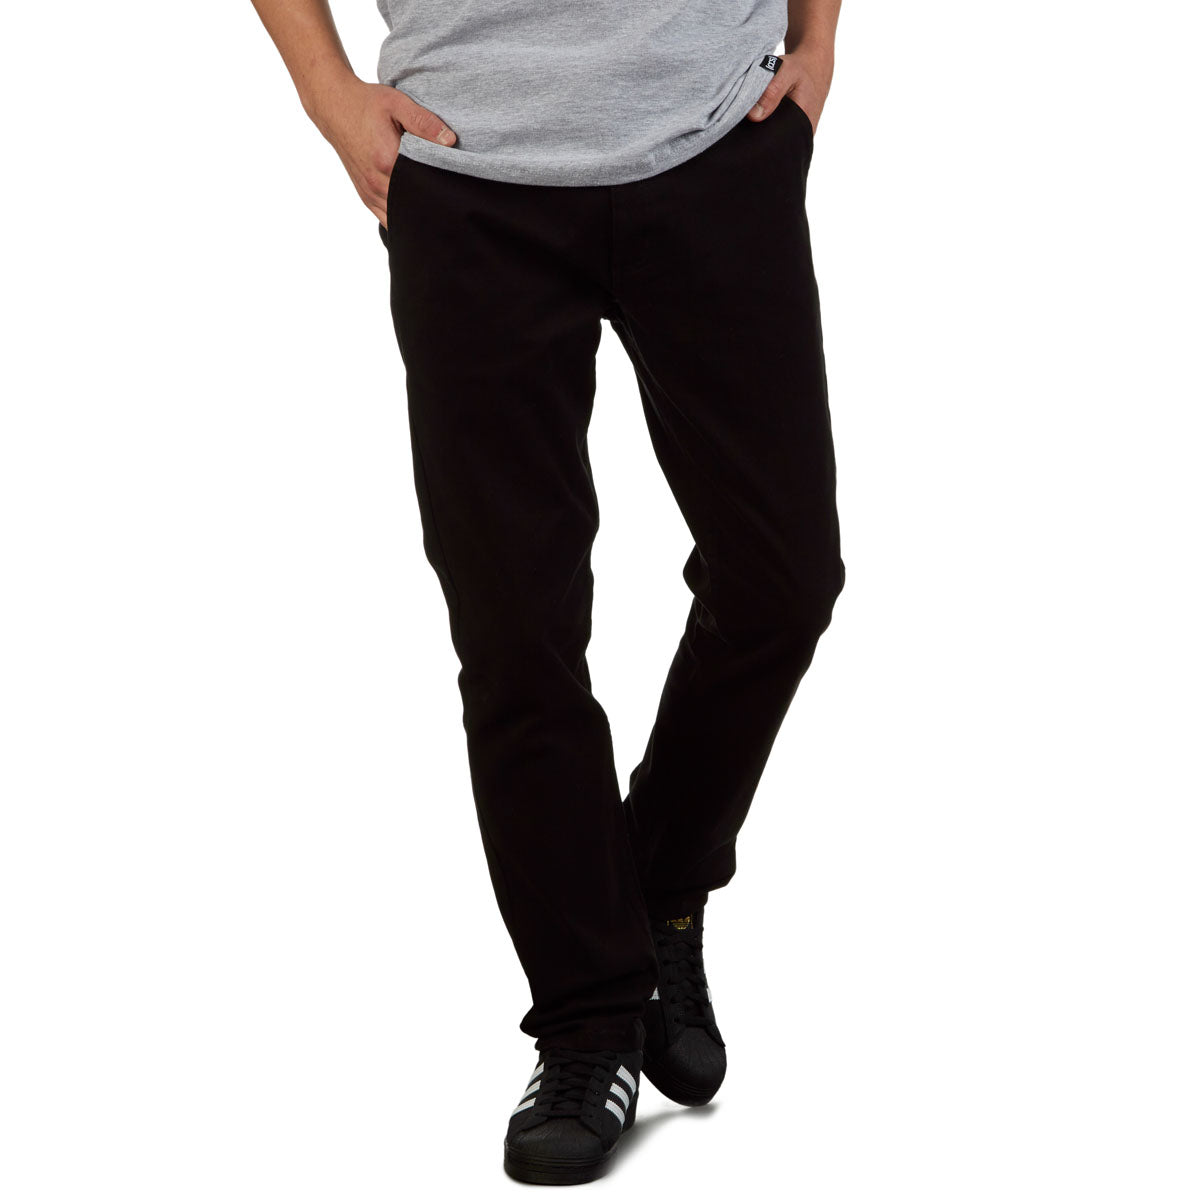 CCS Standard Plus Straight Chino Pants - Black image 1